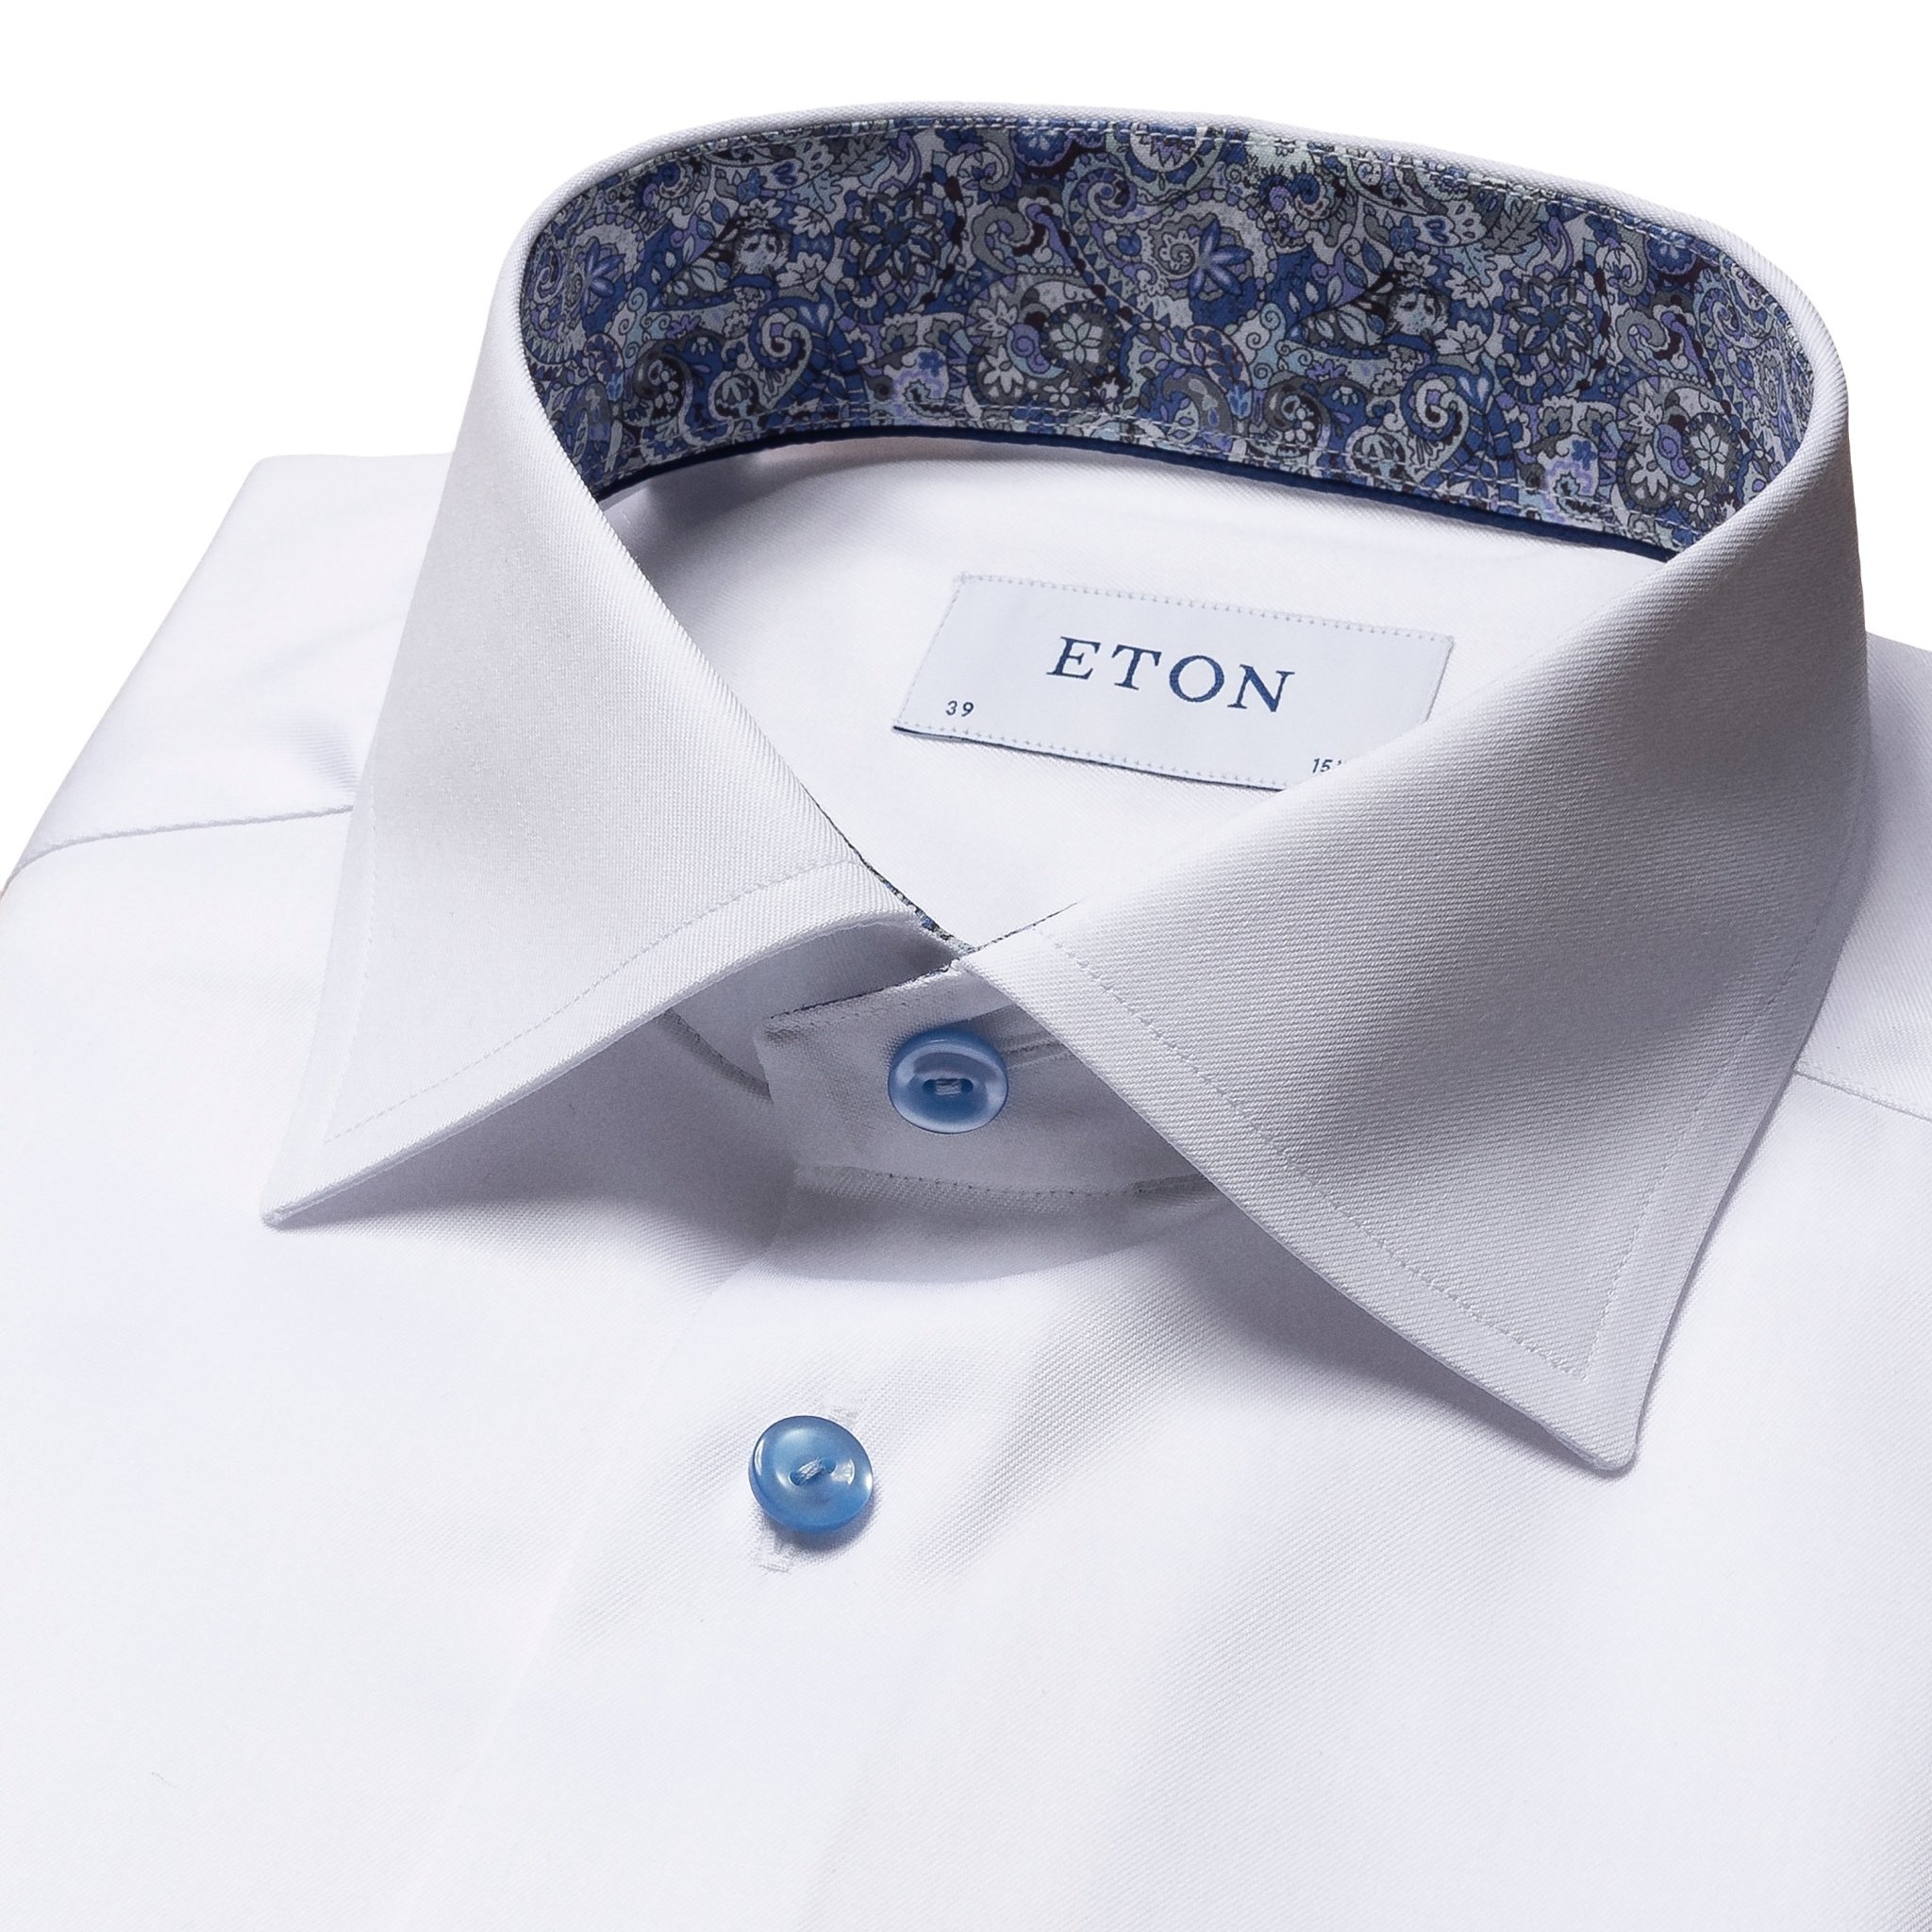 Eton Signature twill with trim and contrast - slim